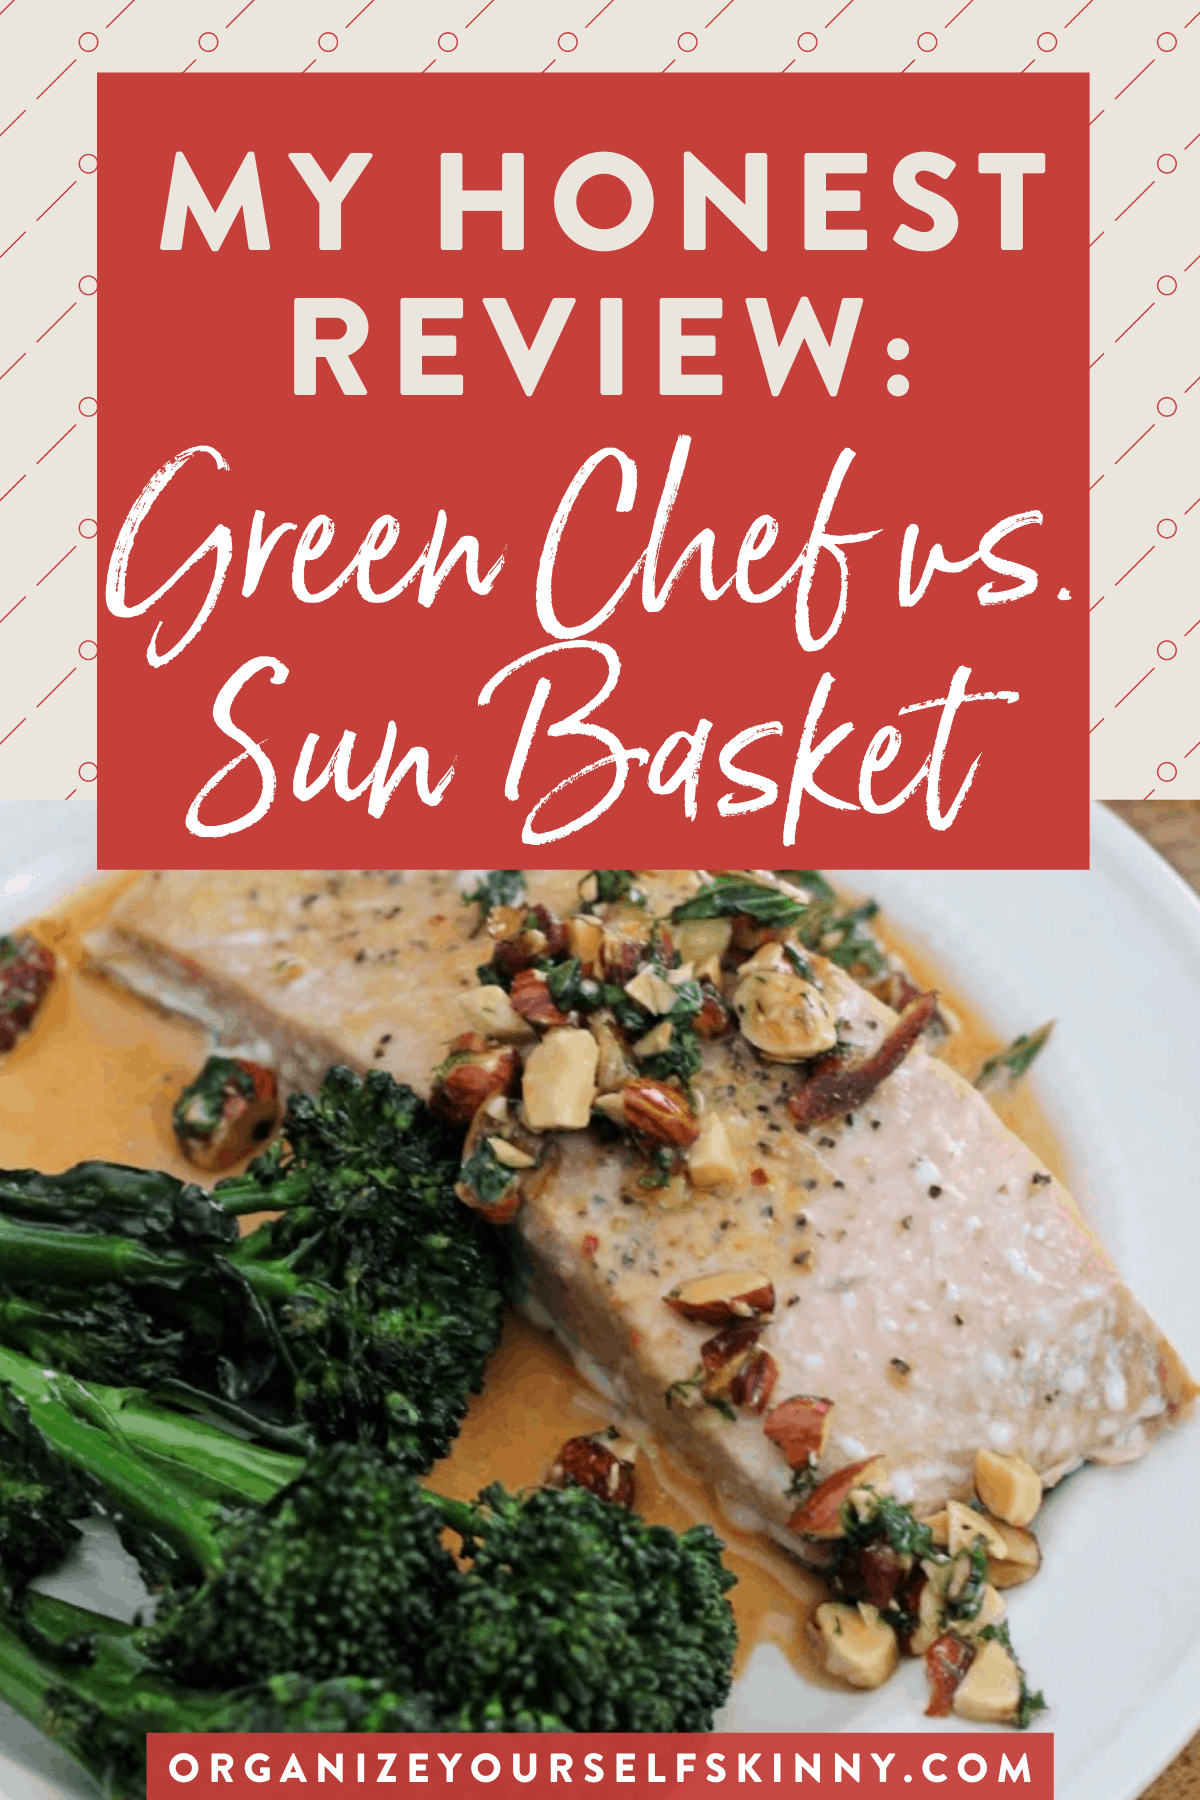 Green Chef vs. Sun basket